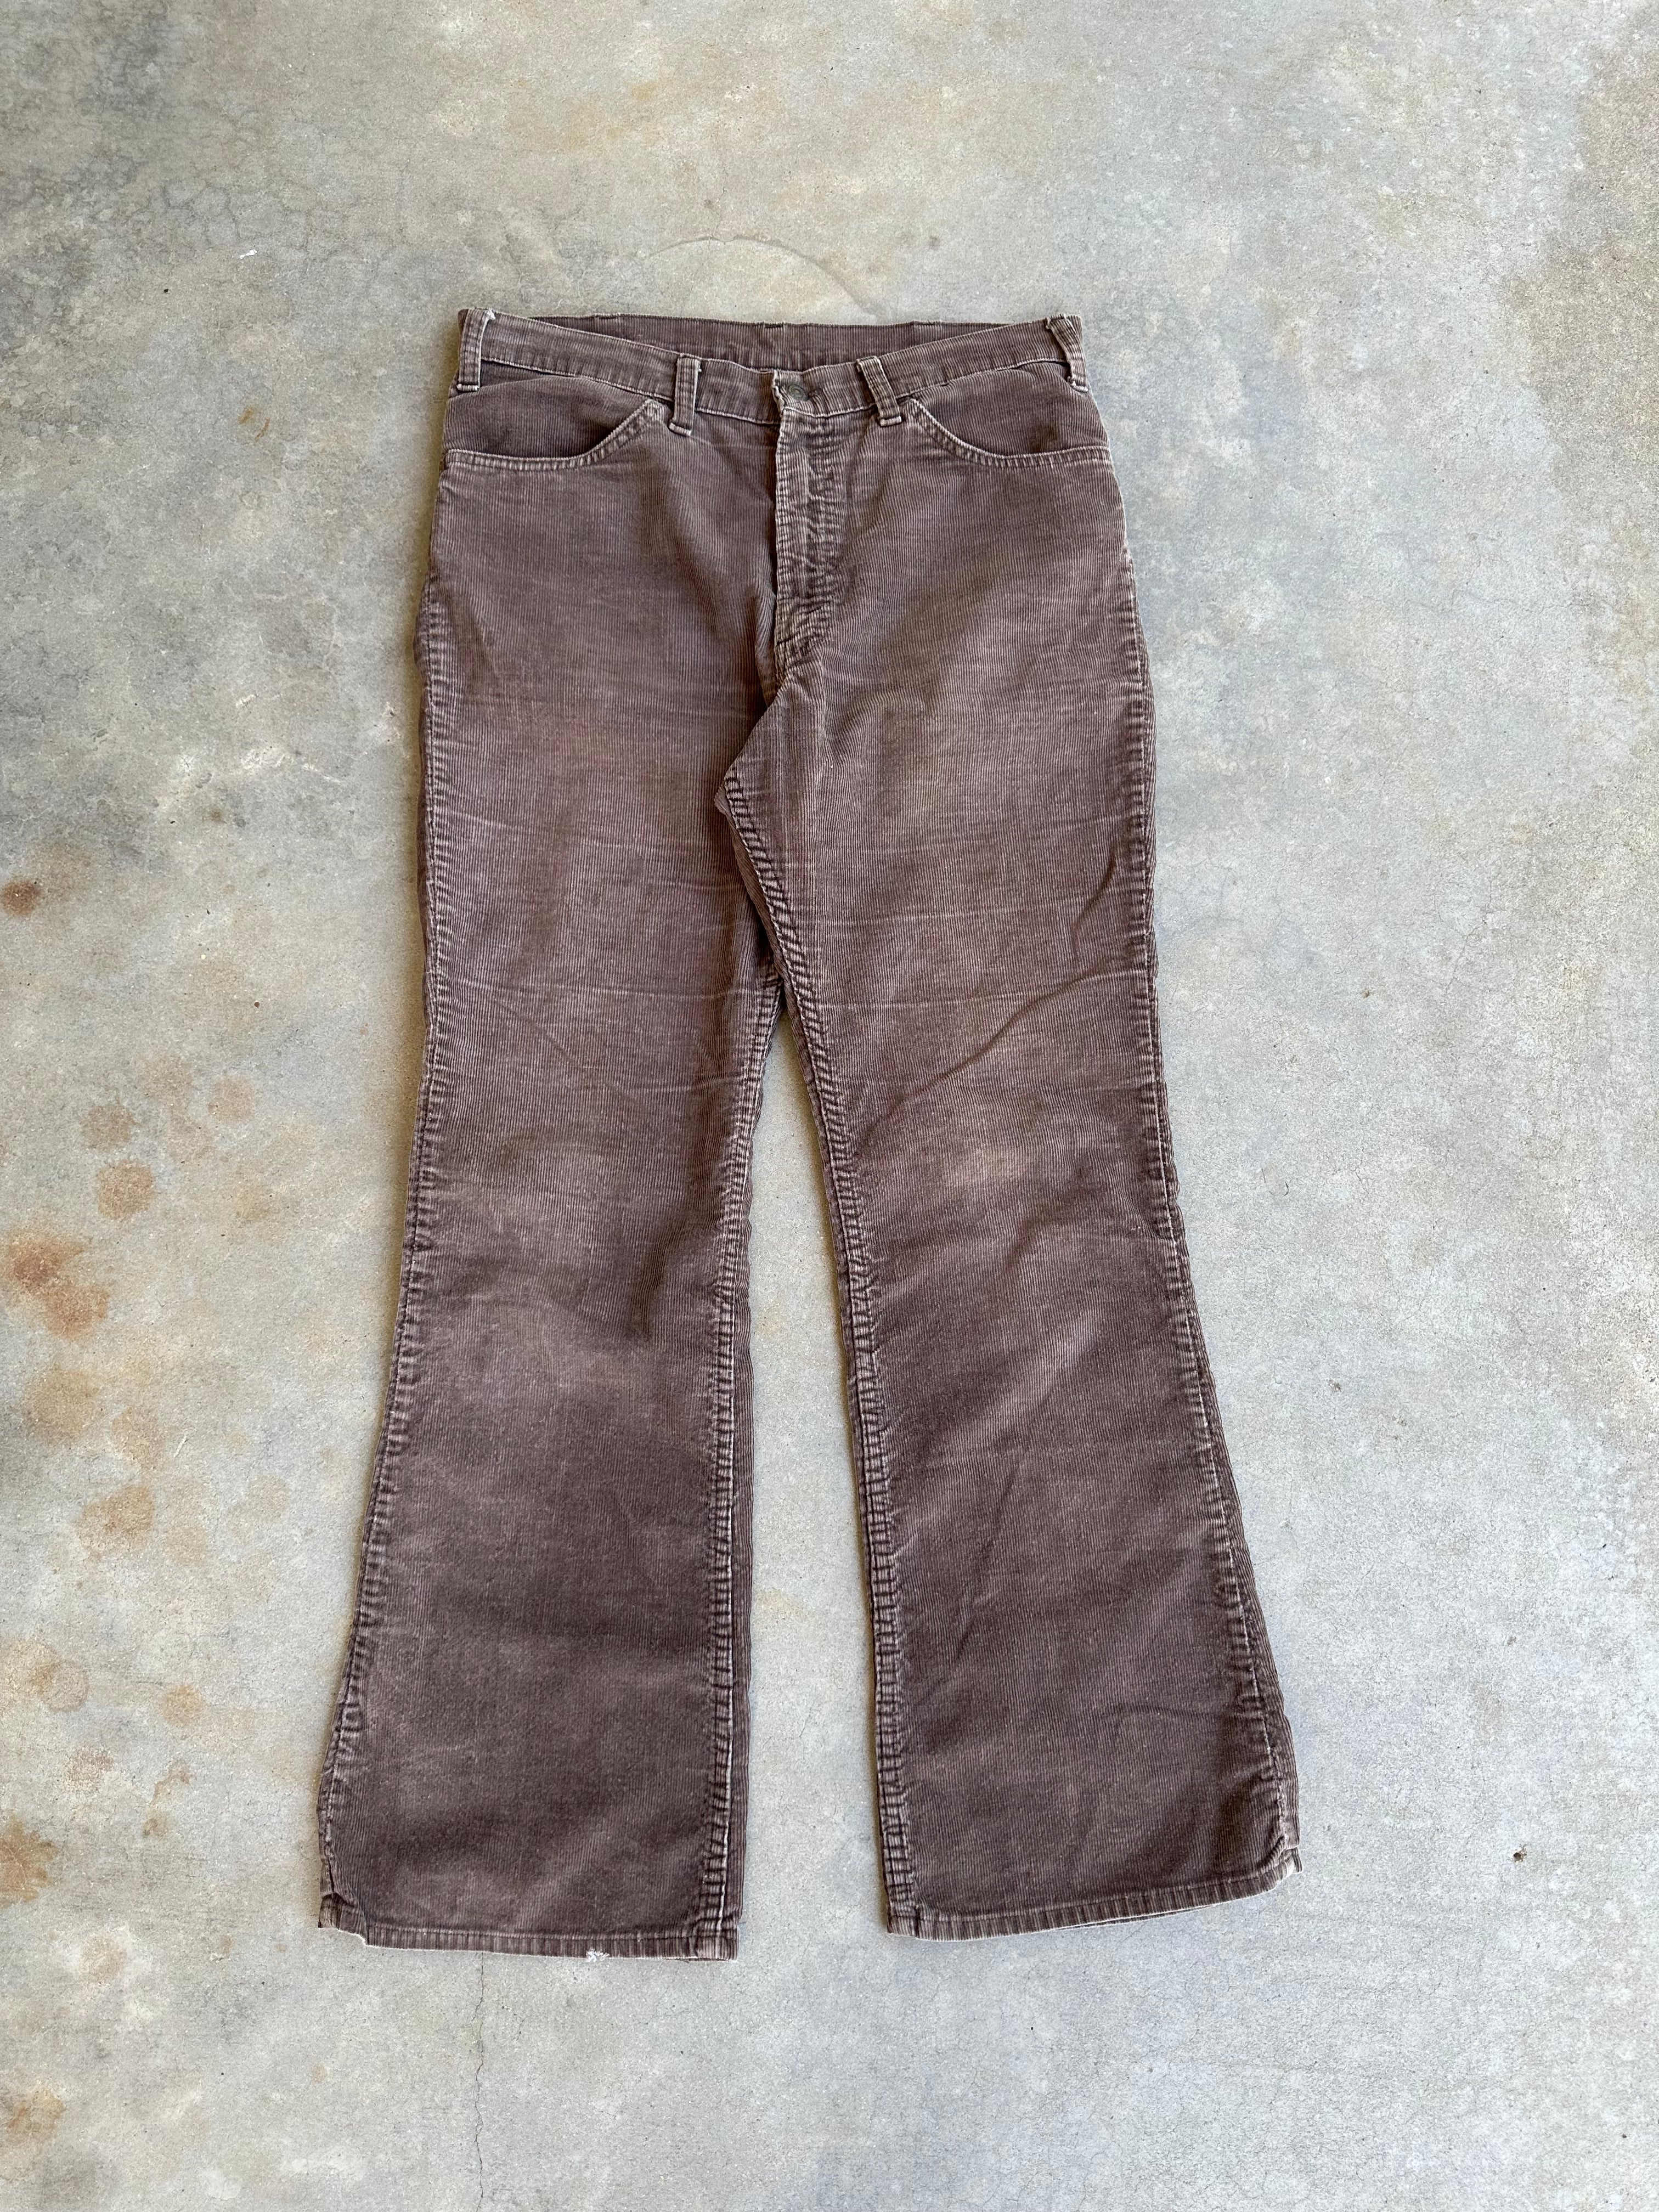 1970s Levi’s 517 Big E Corduroy Pants (34"x30")